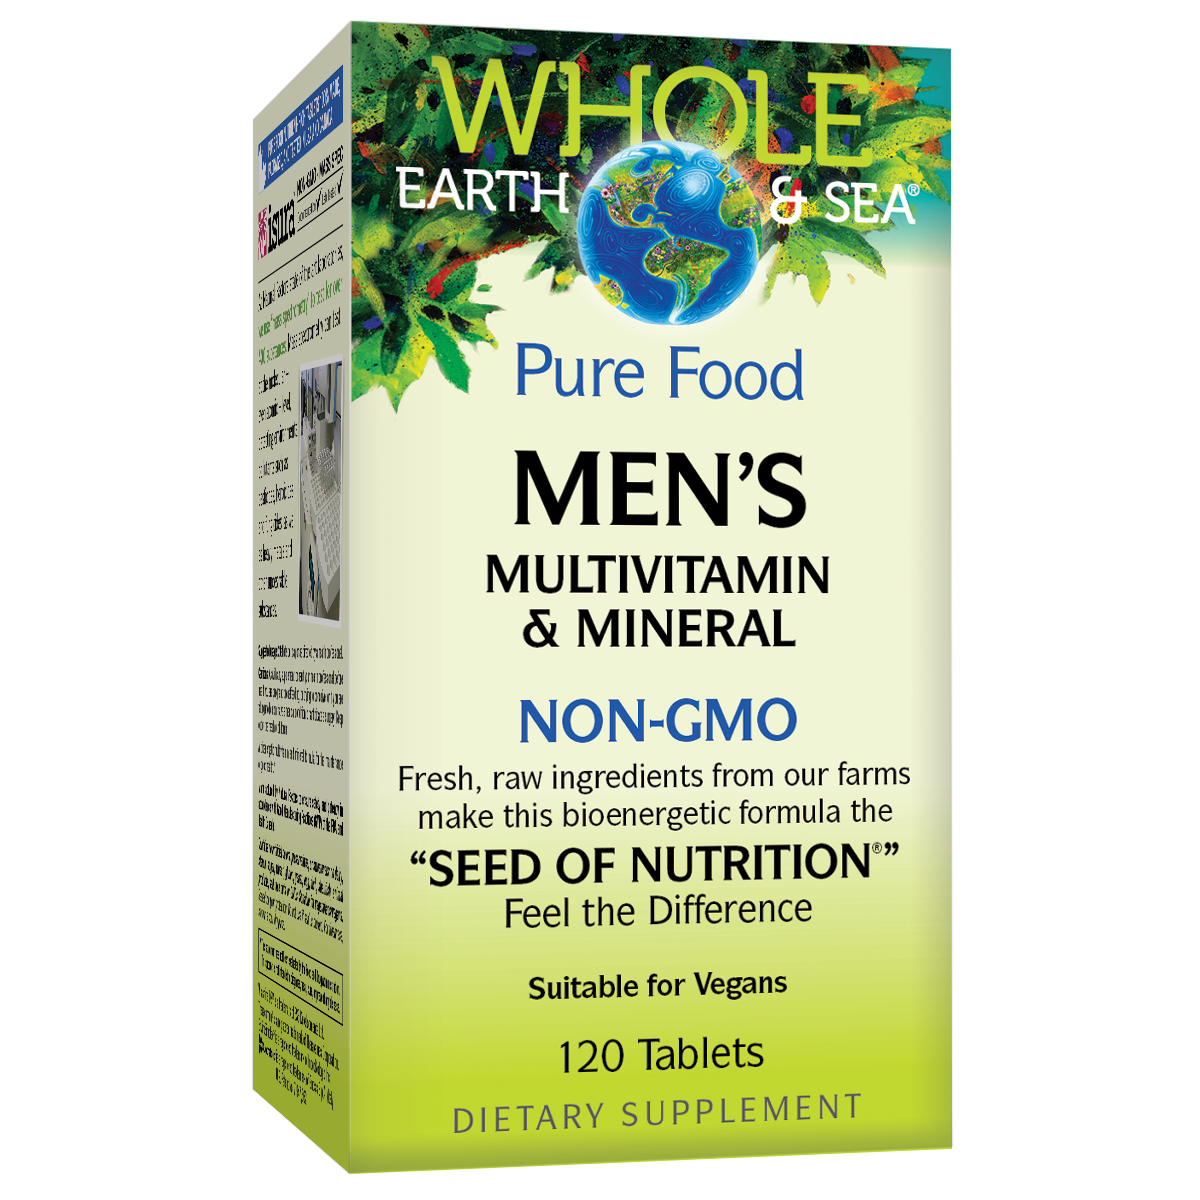 Men's Multivitamin & Mineral|variant|hi-res|35522U